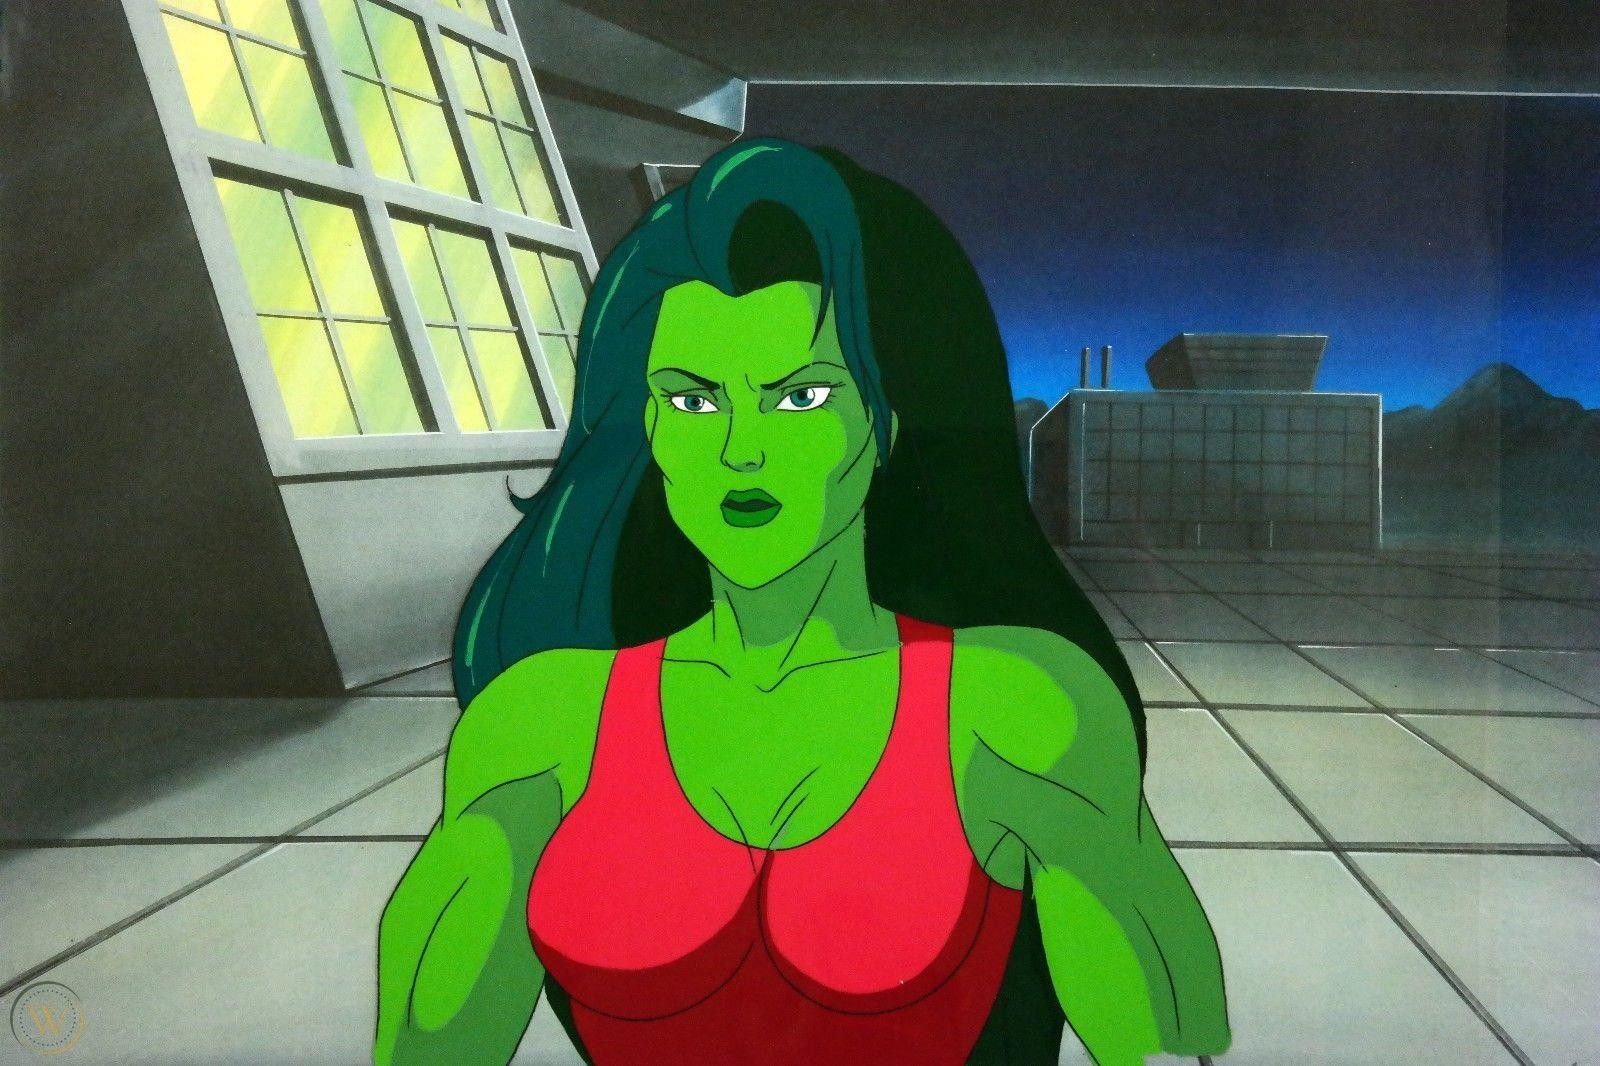 Marvel's She-Hulk series on Disney+ casts Orphan Black star